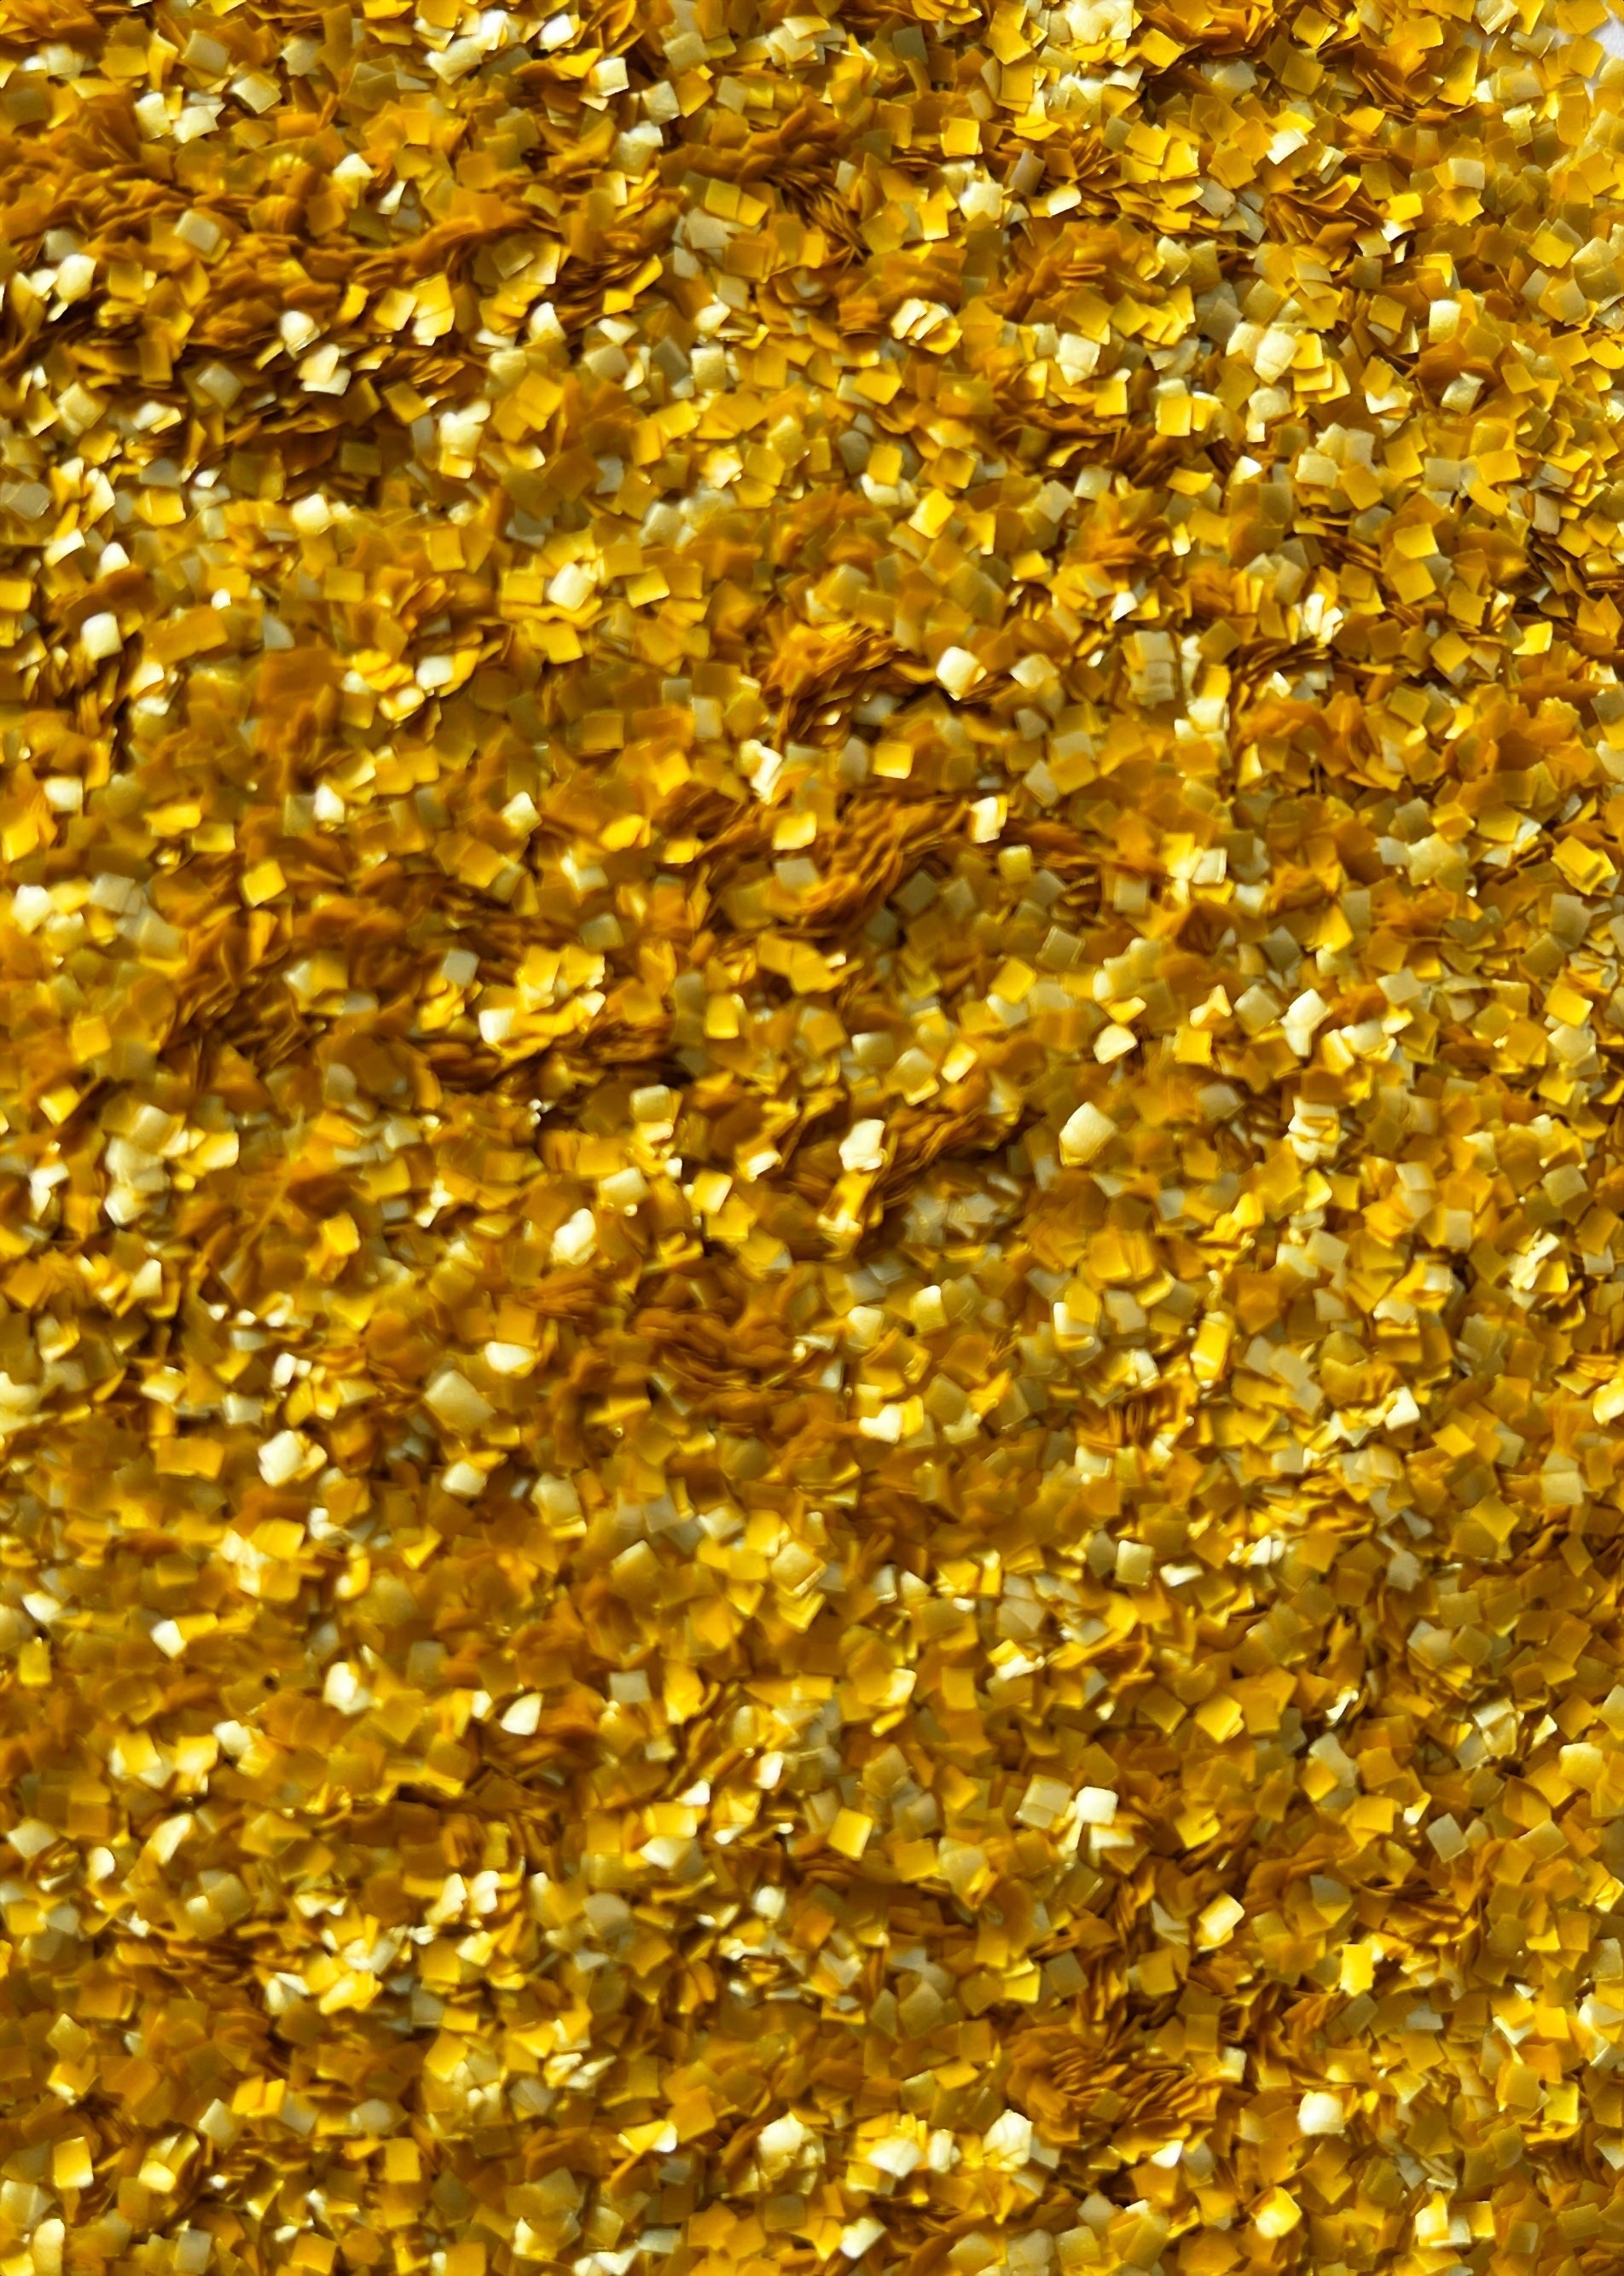 Edible Glitter Gold